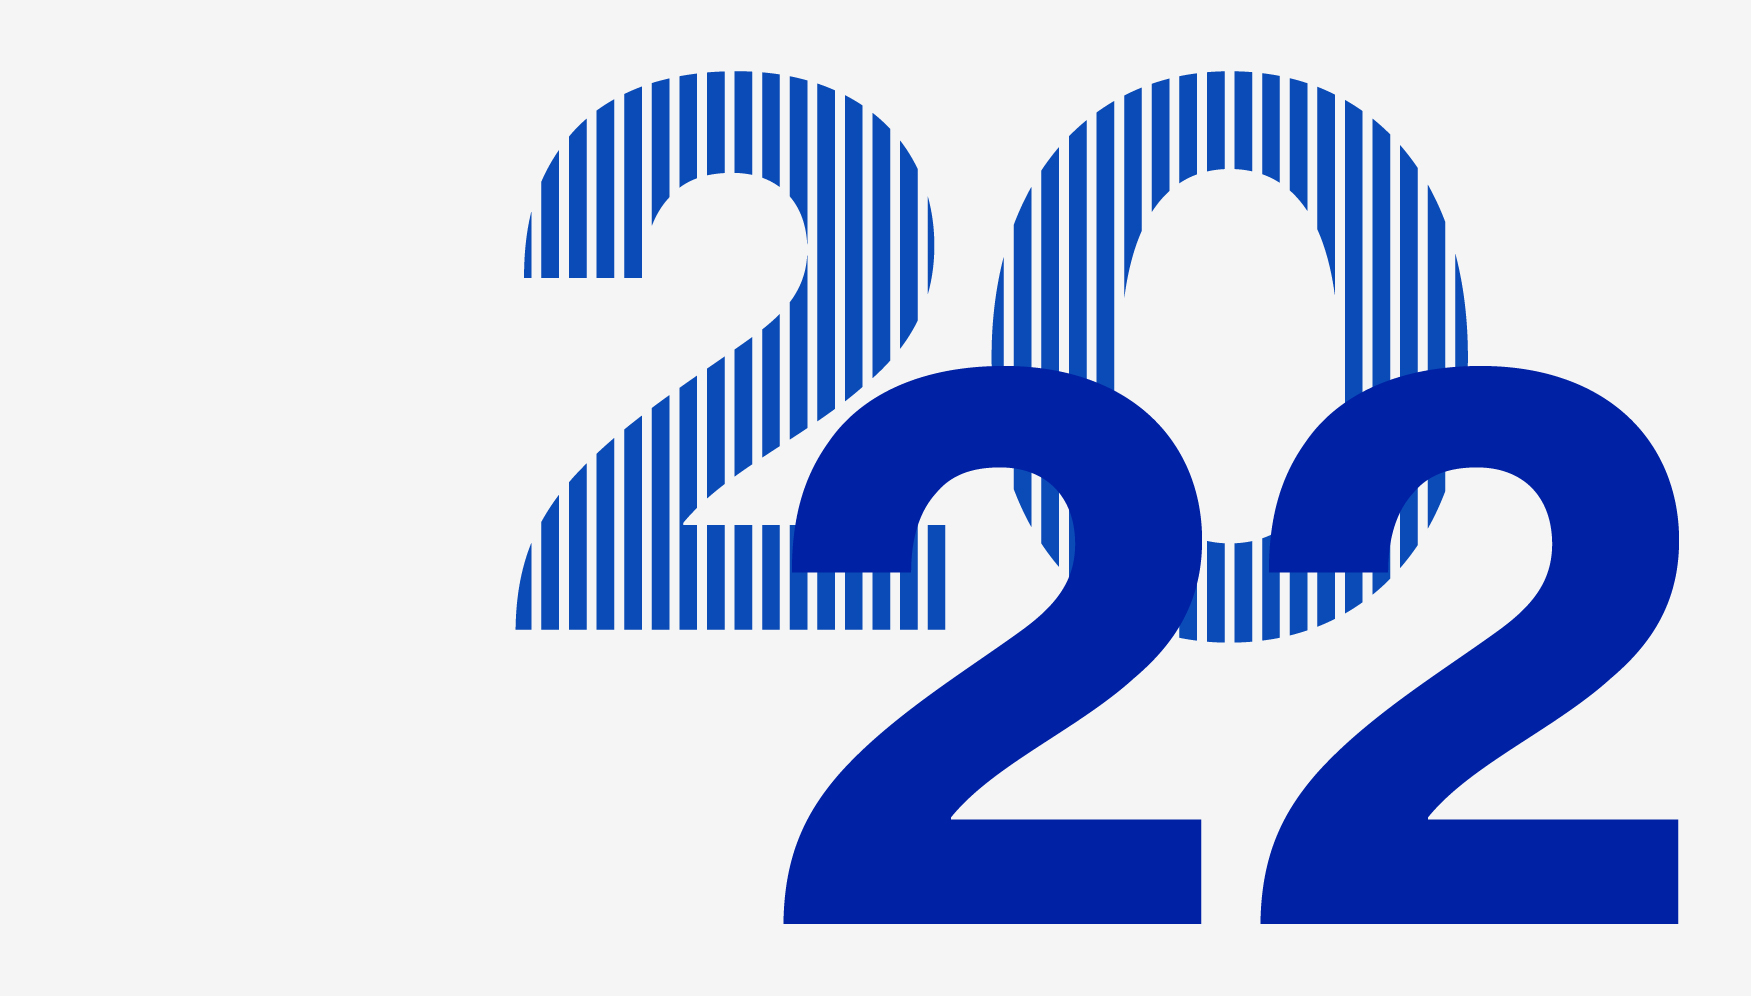 2022 graphic